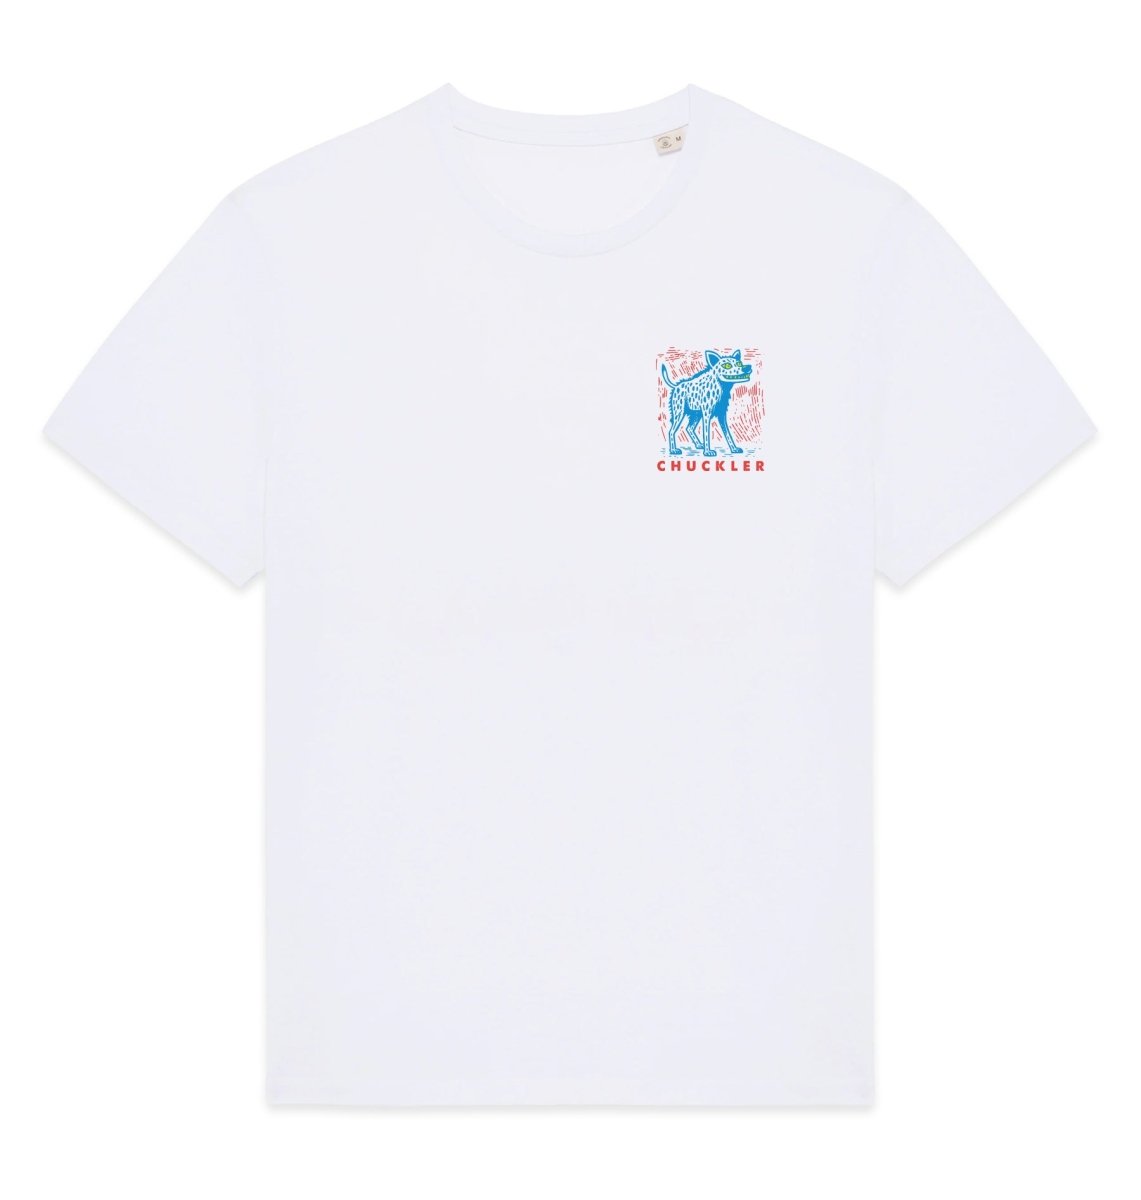 Chuckler Graphic Mens T-shirt - Blue Panda